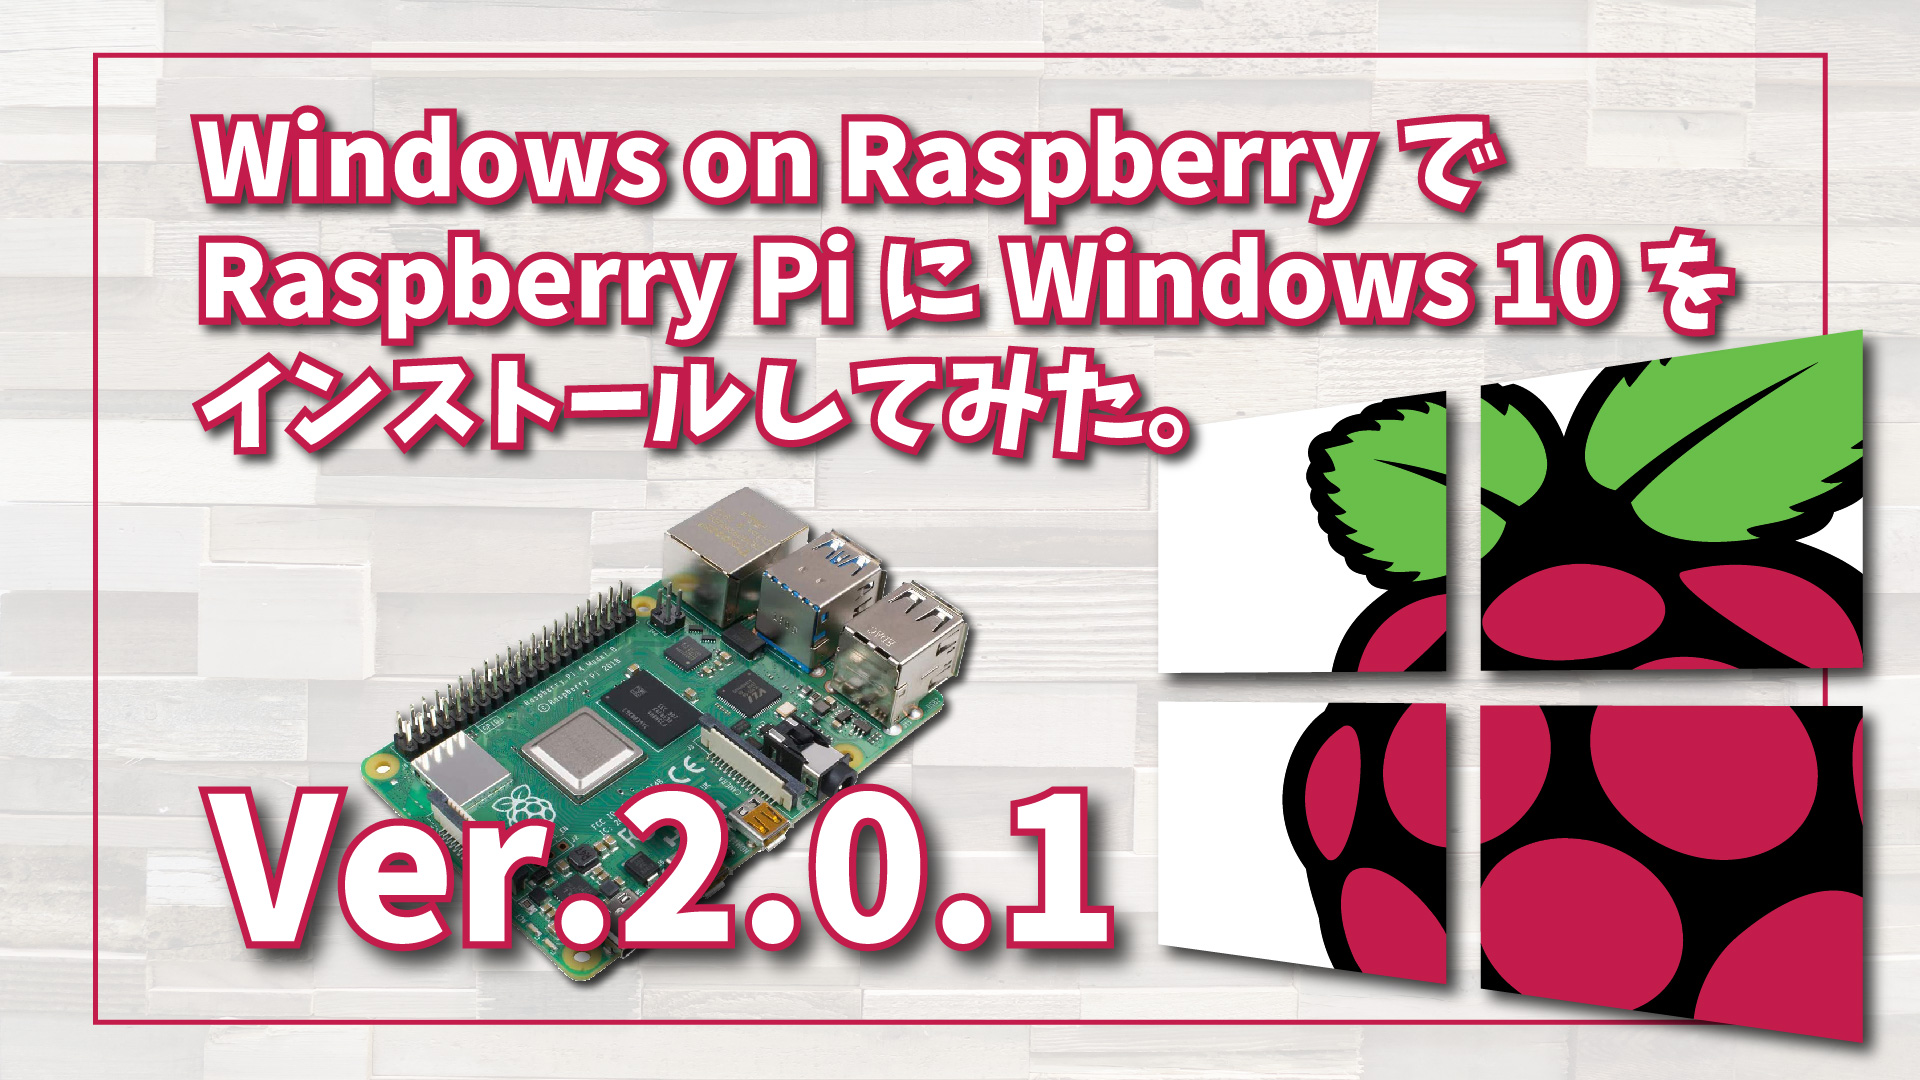 Windows on Raspberry で Raspberry Pi に Windows 10 をインストールしてみた。Ver. 2.0.1Windows on Raspberry で Raspberry Pi に Windows 10 をインストールしてみた。Ver. 2.0.1